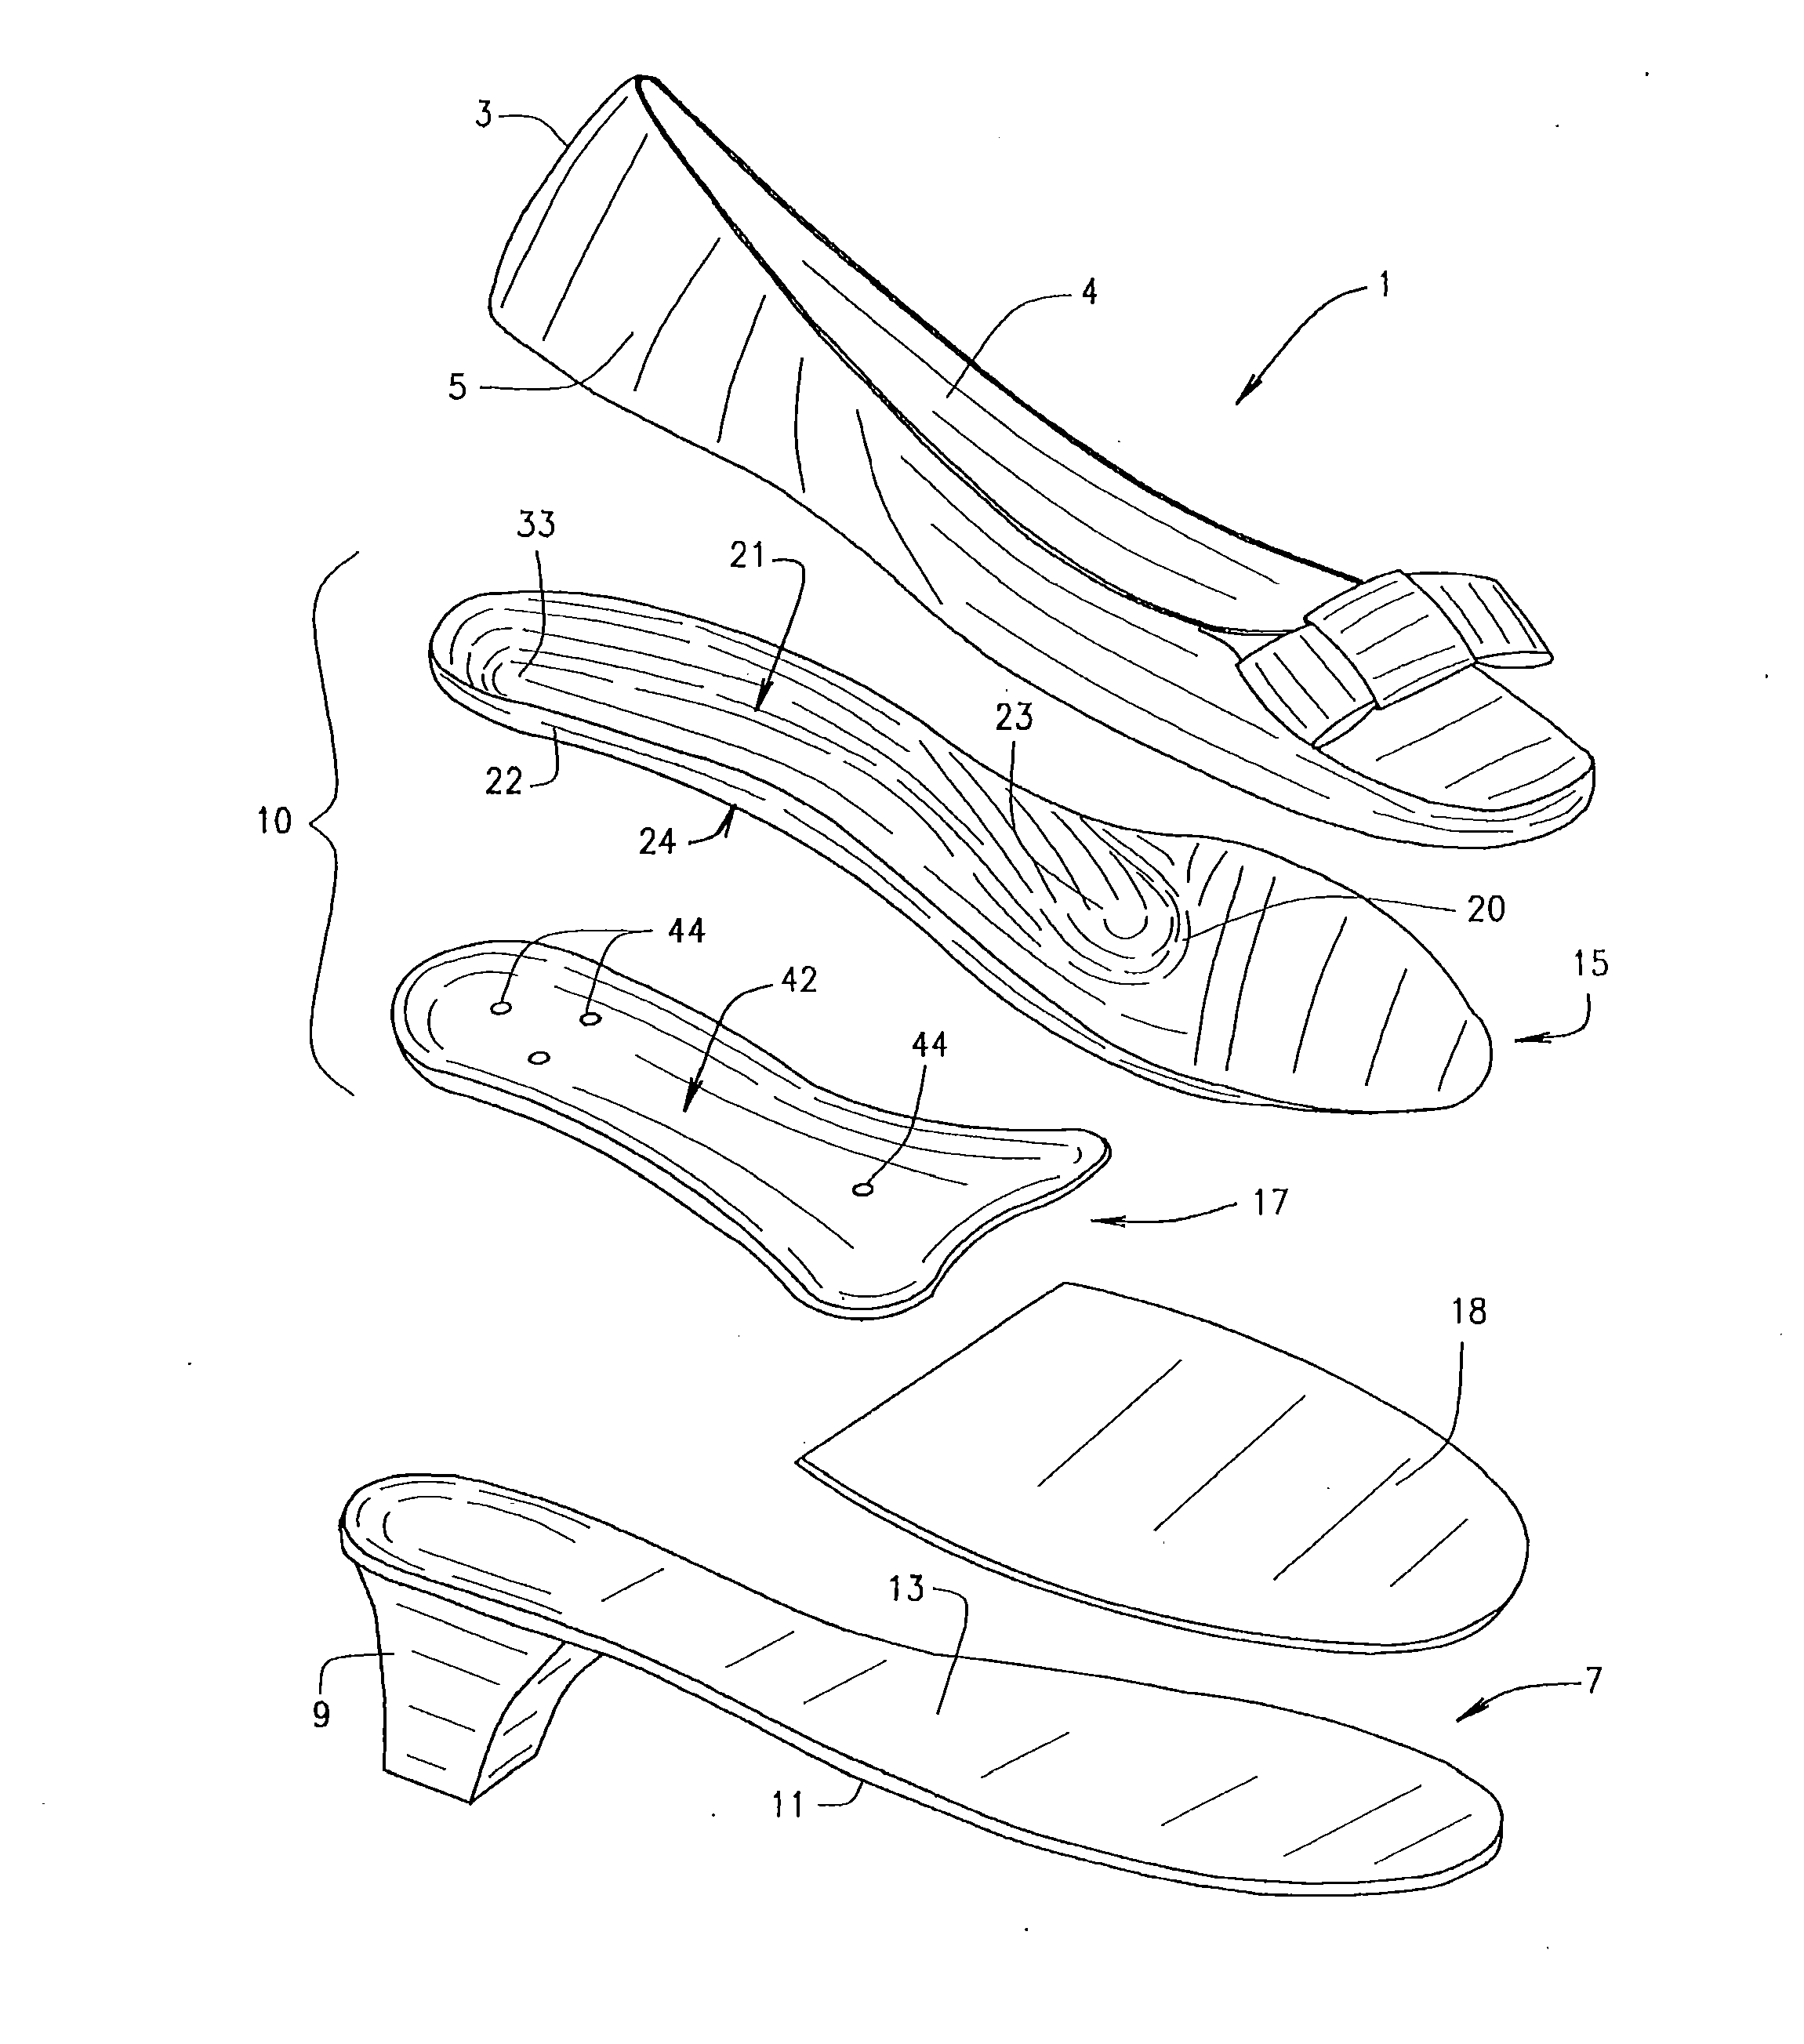 Anatomical shoe insert assembly